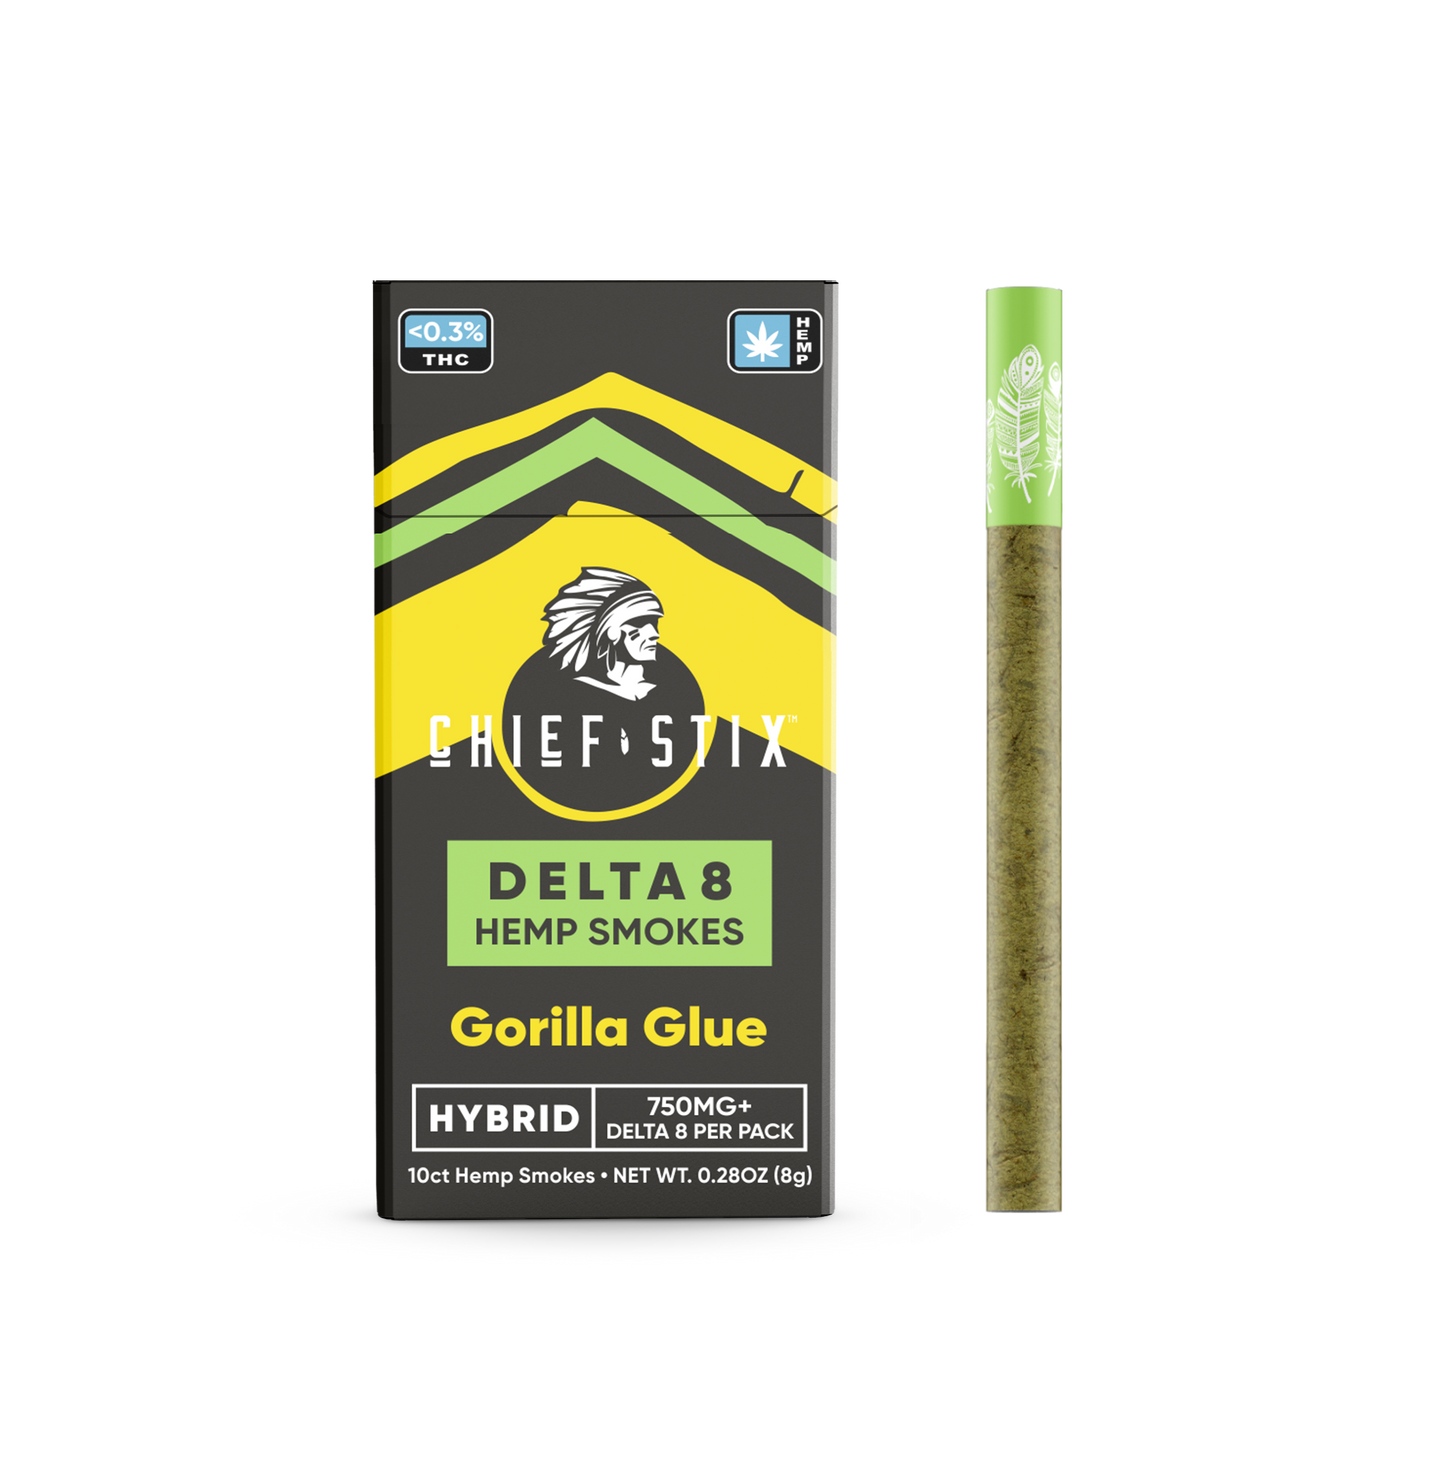 Chief Stix Delta 8 Hemp Smokes 10ct 750mg Gorilla Glue - (10pk Carton) - hhemp.co Wholesale 